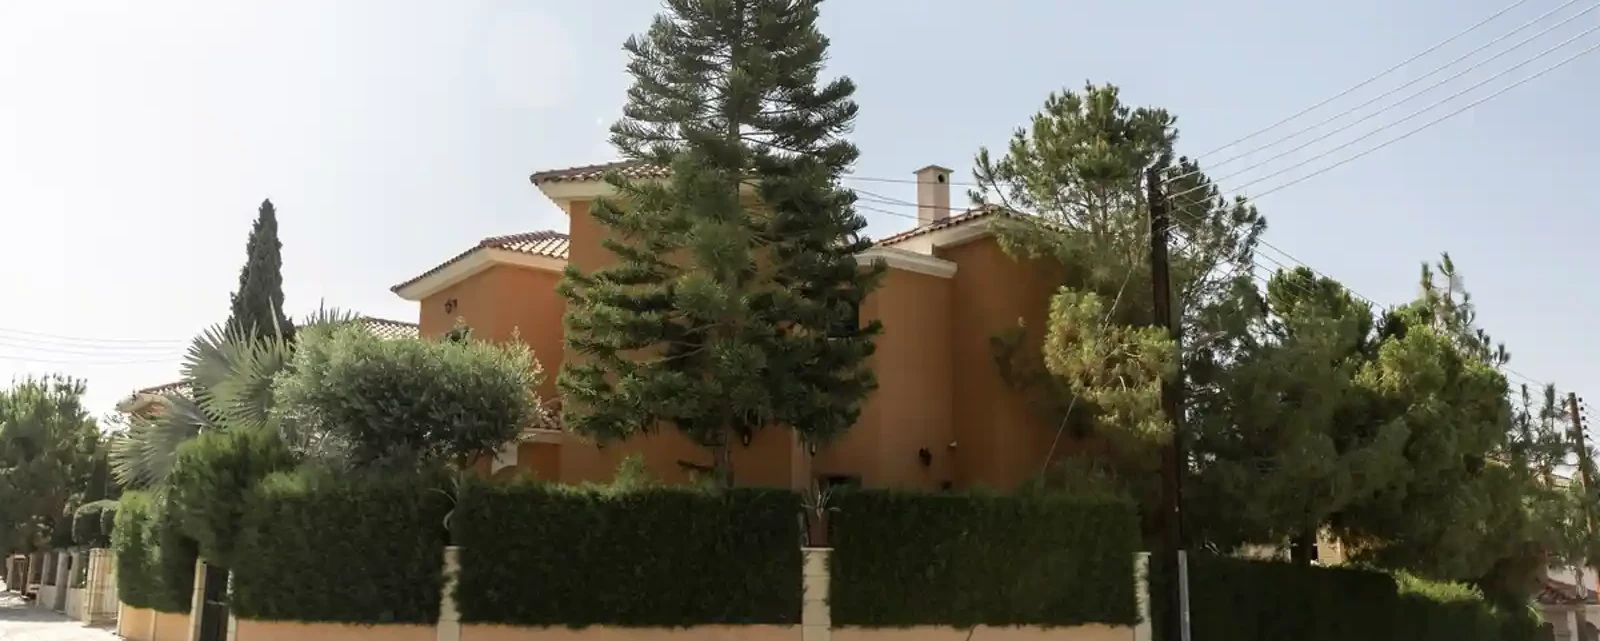 5-bedroom villa fоr sаle €2.200.000, image 1